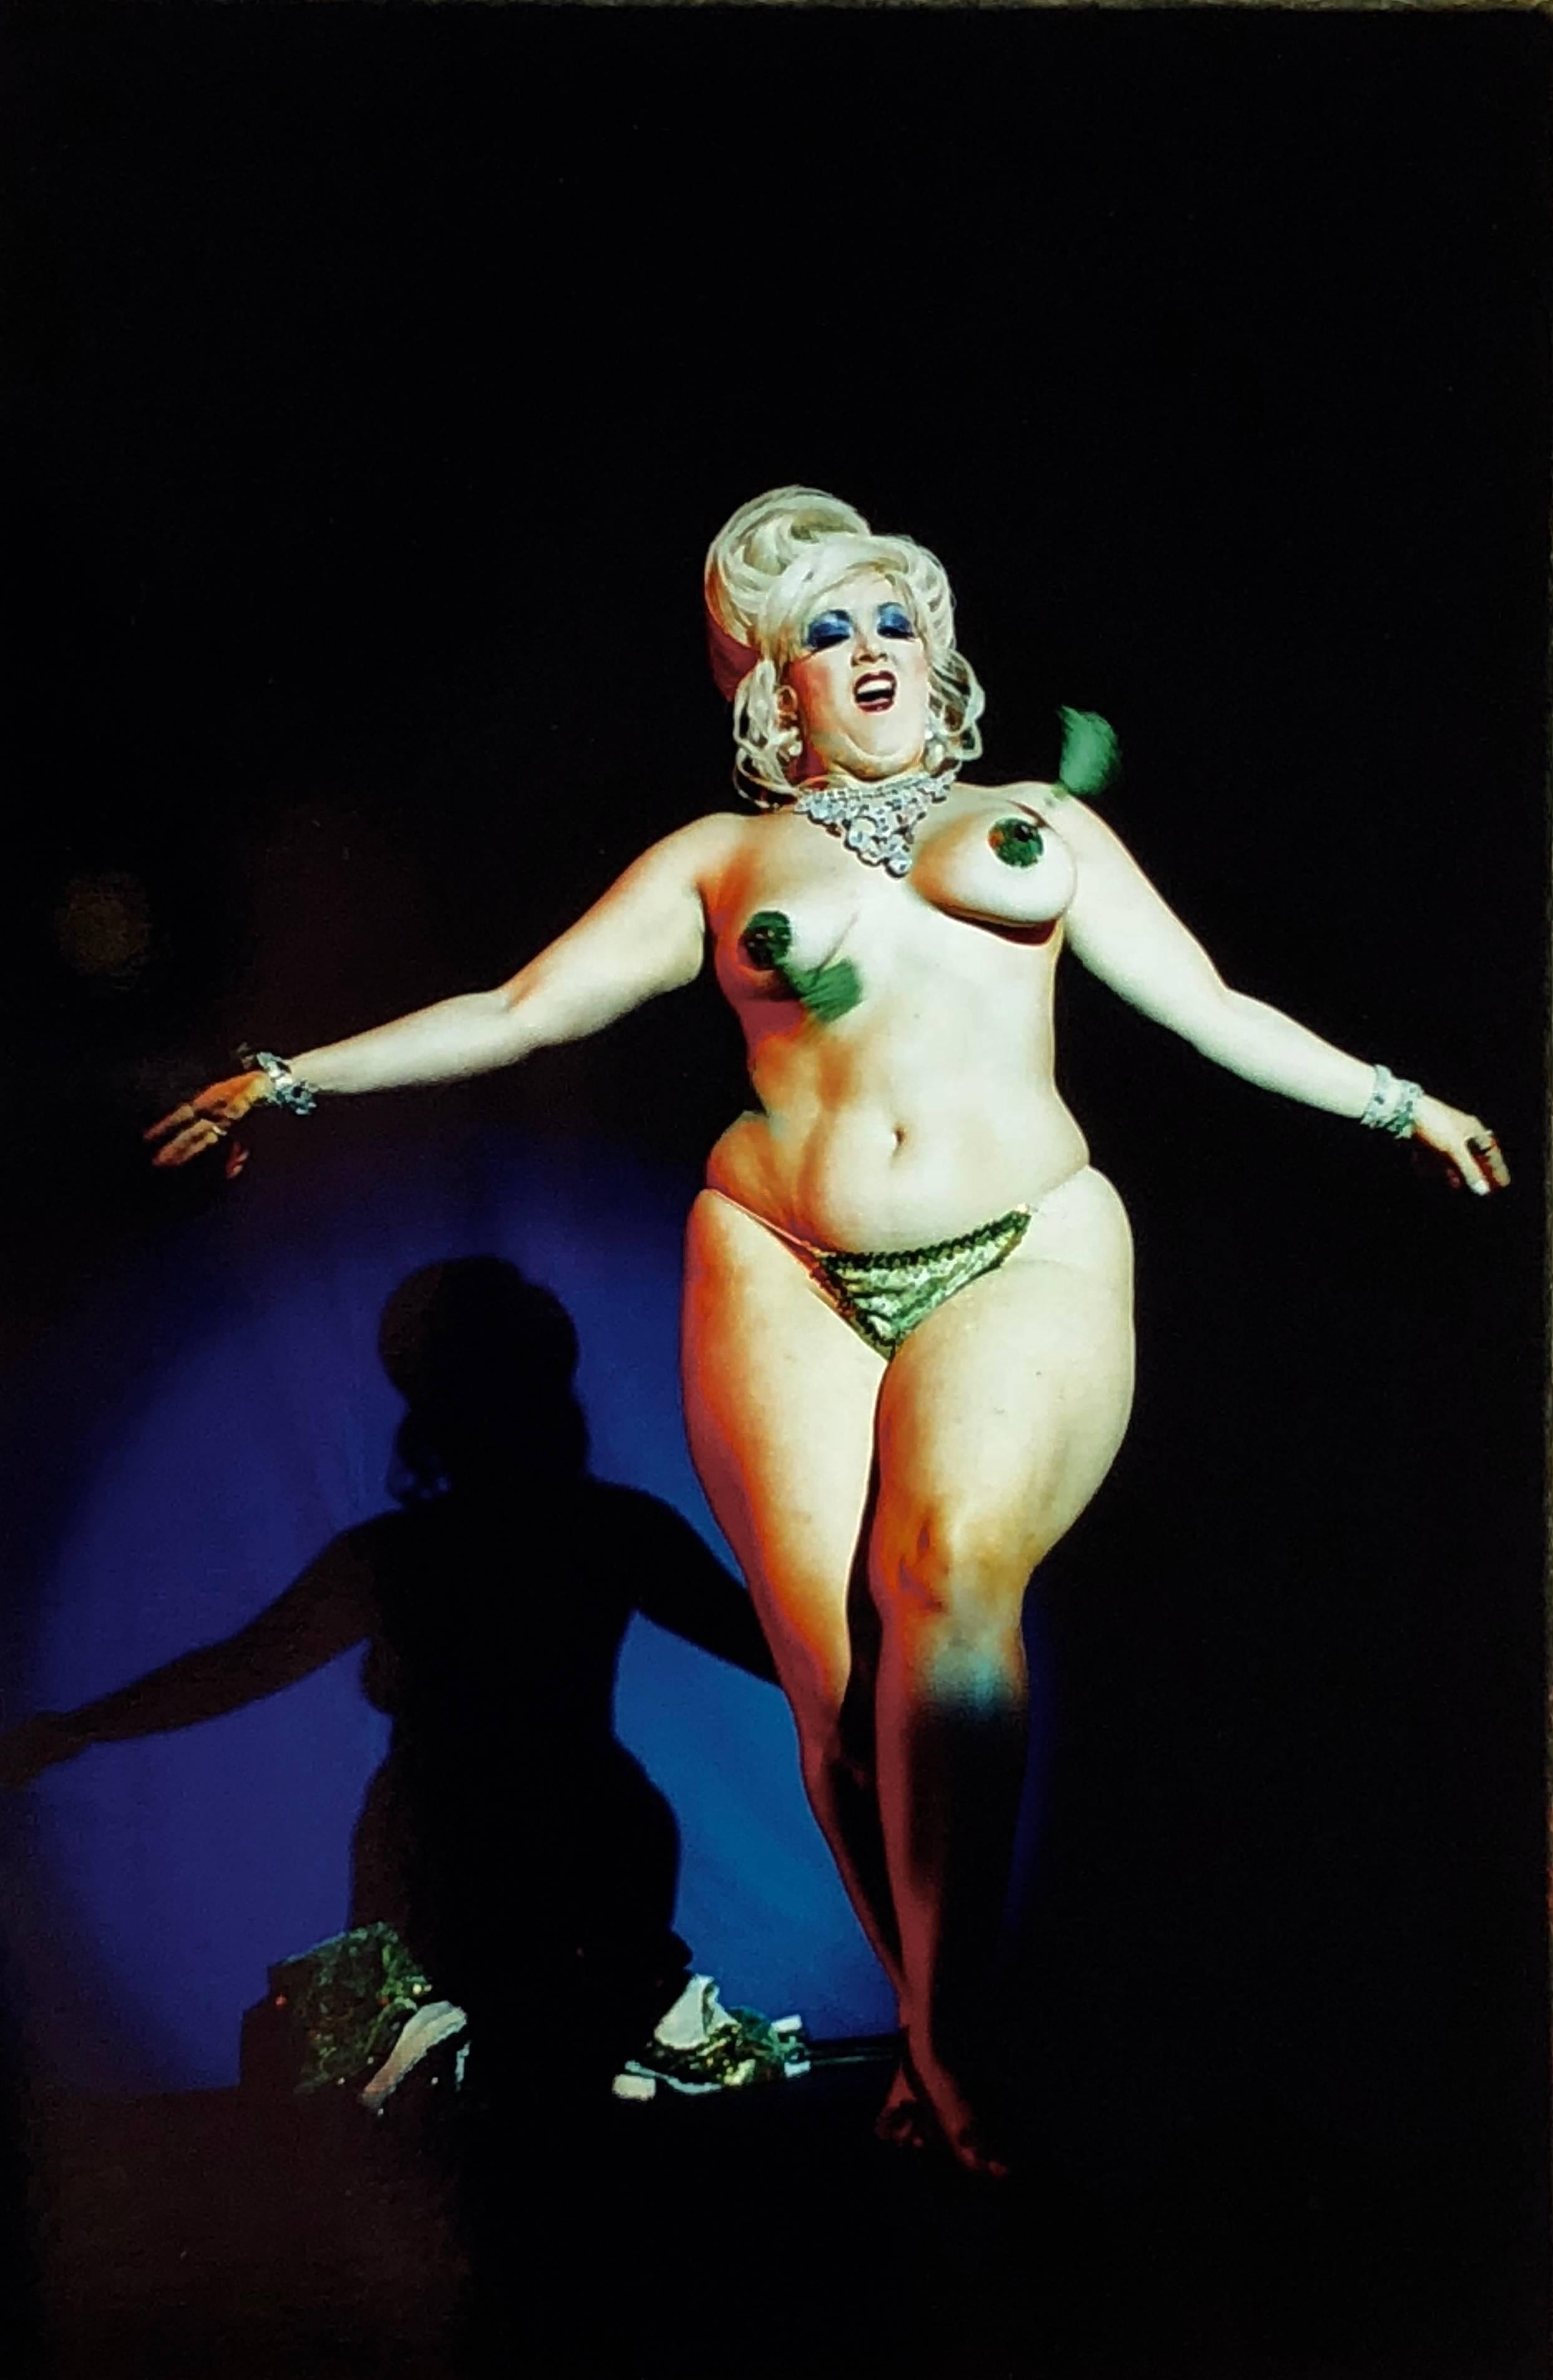 Richard Heeps Color Photograph - Burlesque Series, Martini Fan Dance XXII, Tease-O-Rama, Hollywood, Los Angeles